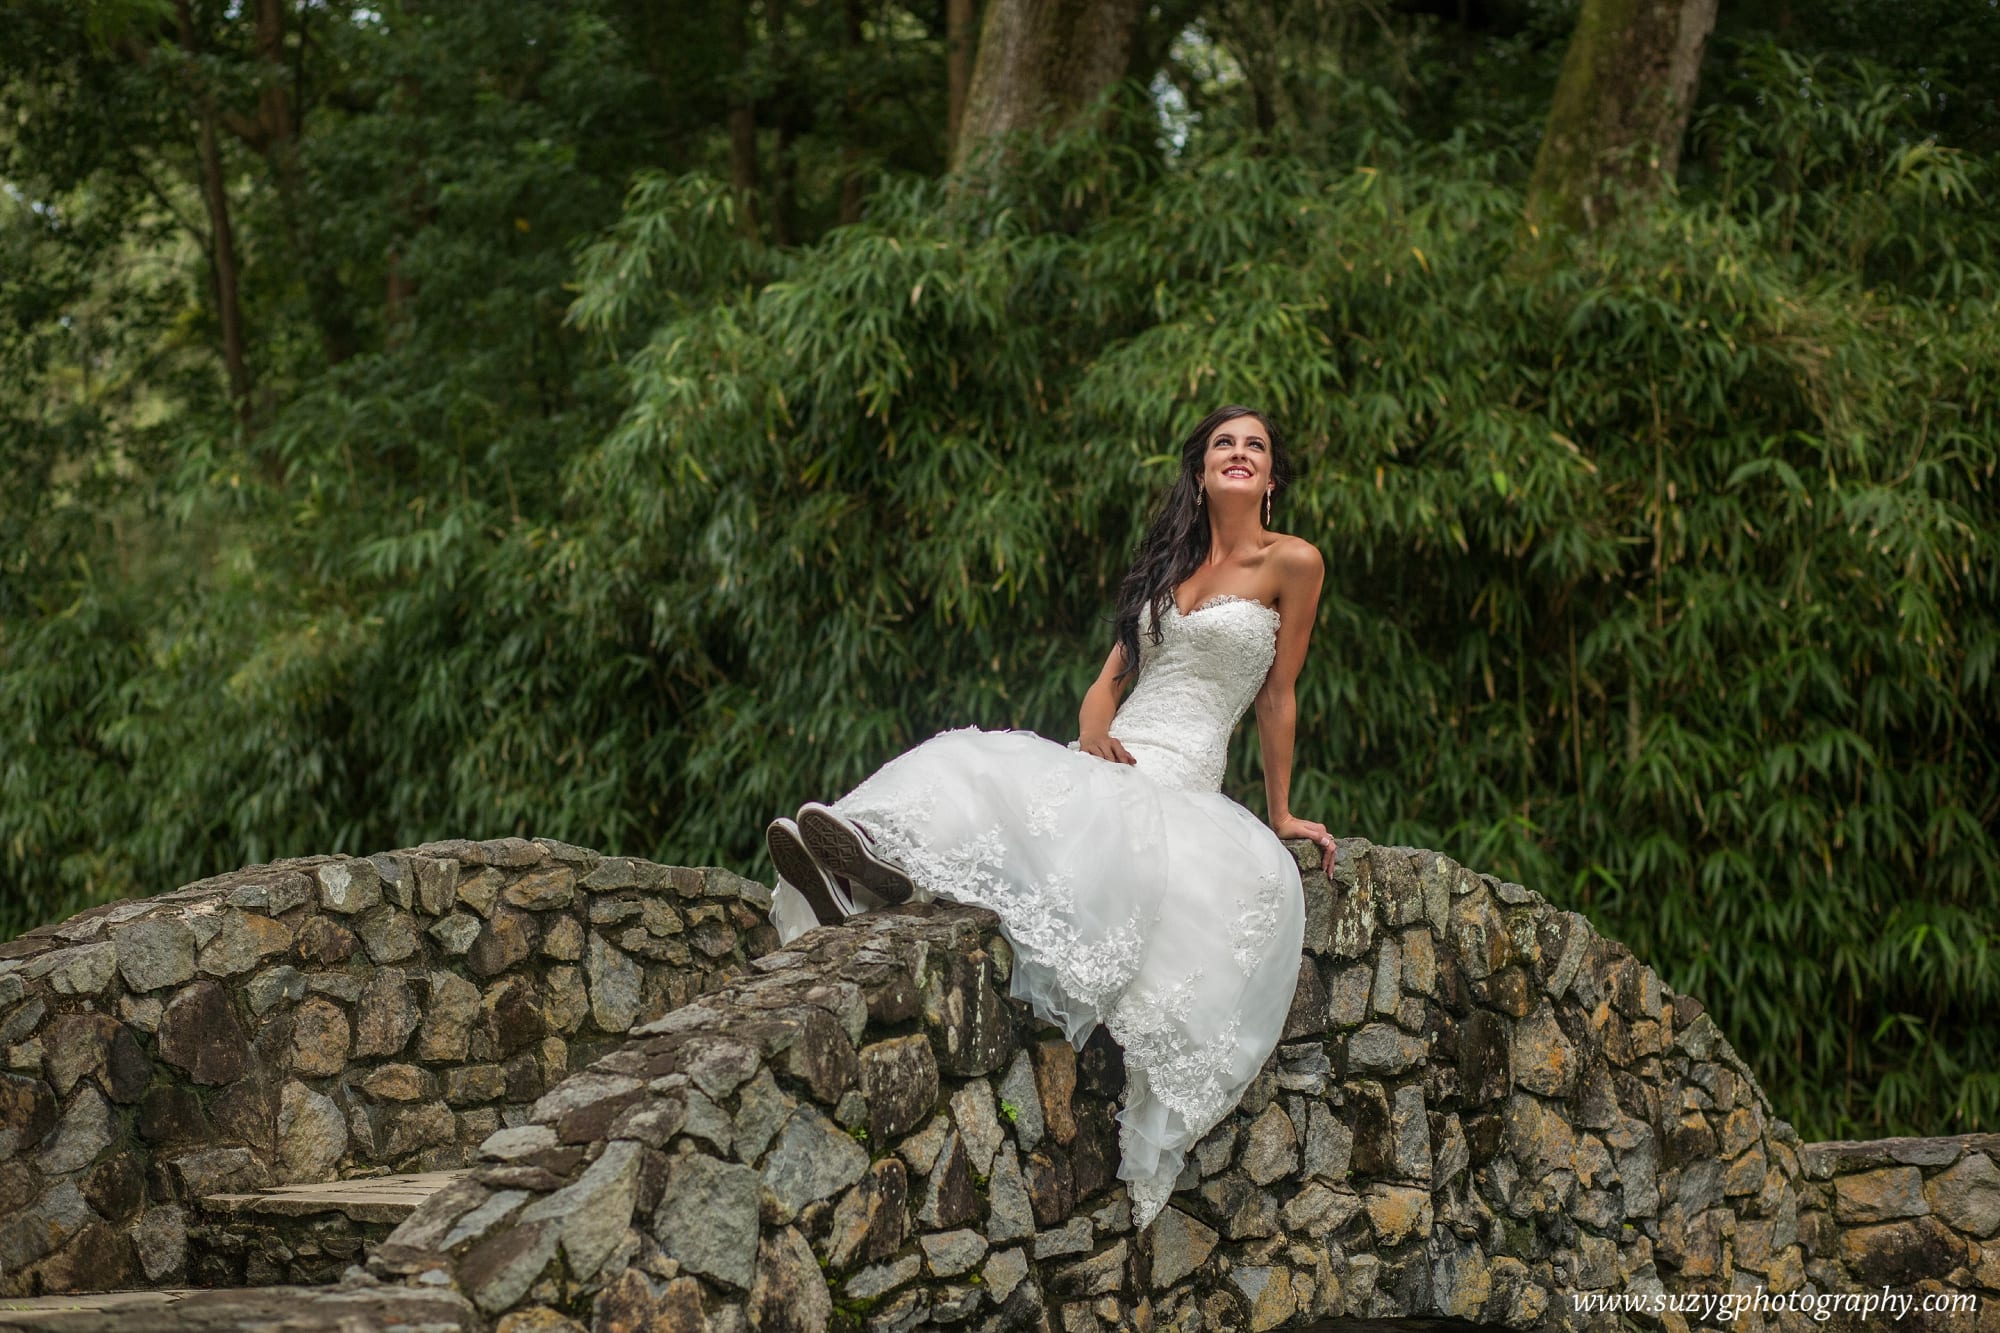 suzyg-suzy-g-photography-averyisland-avery-island-bridals-weddings-wedding photography_0008